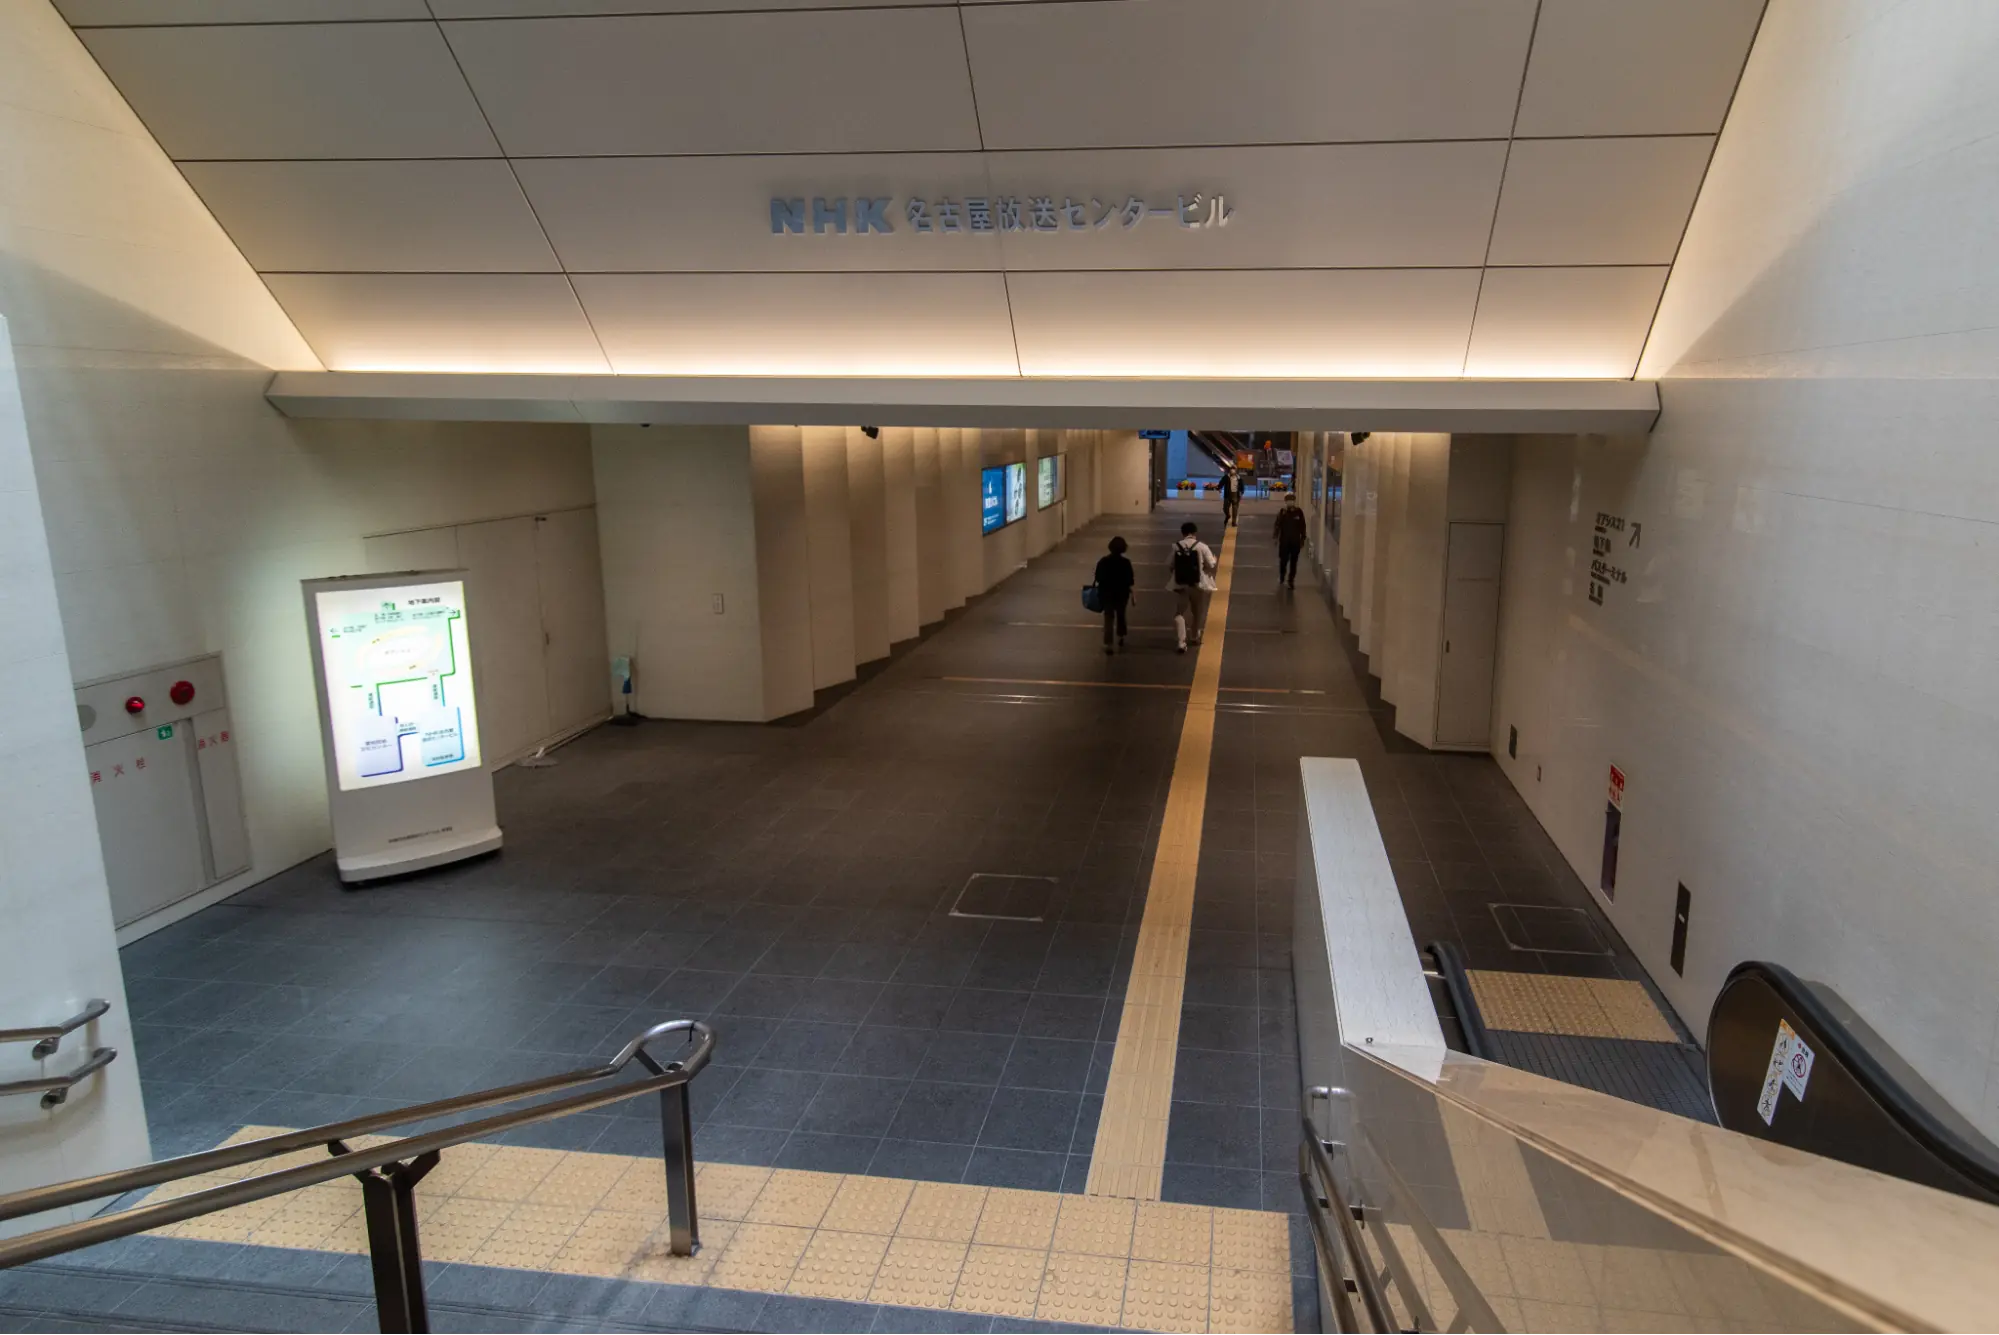 NHK名古屋放送センタービルオアシス21からの入り口